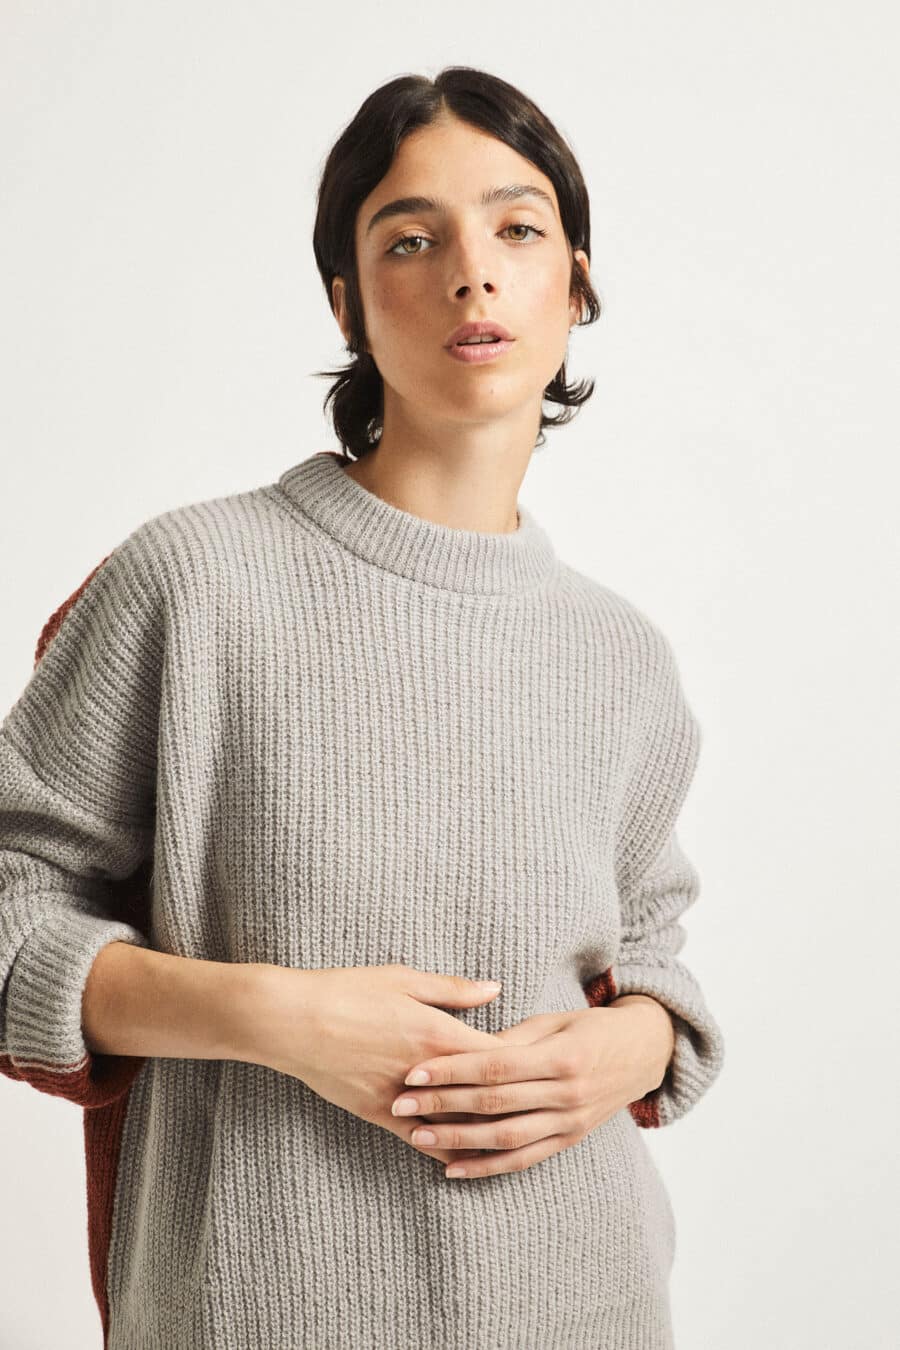 Alberta Sweater by Rita Row